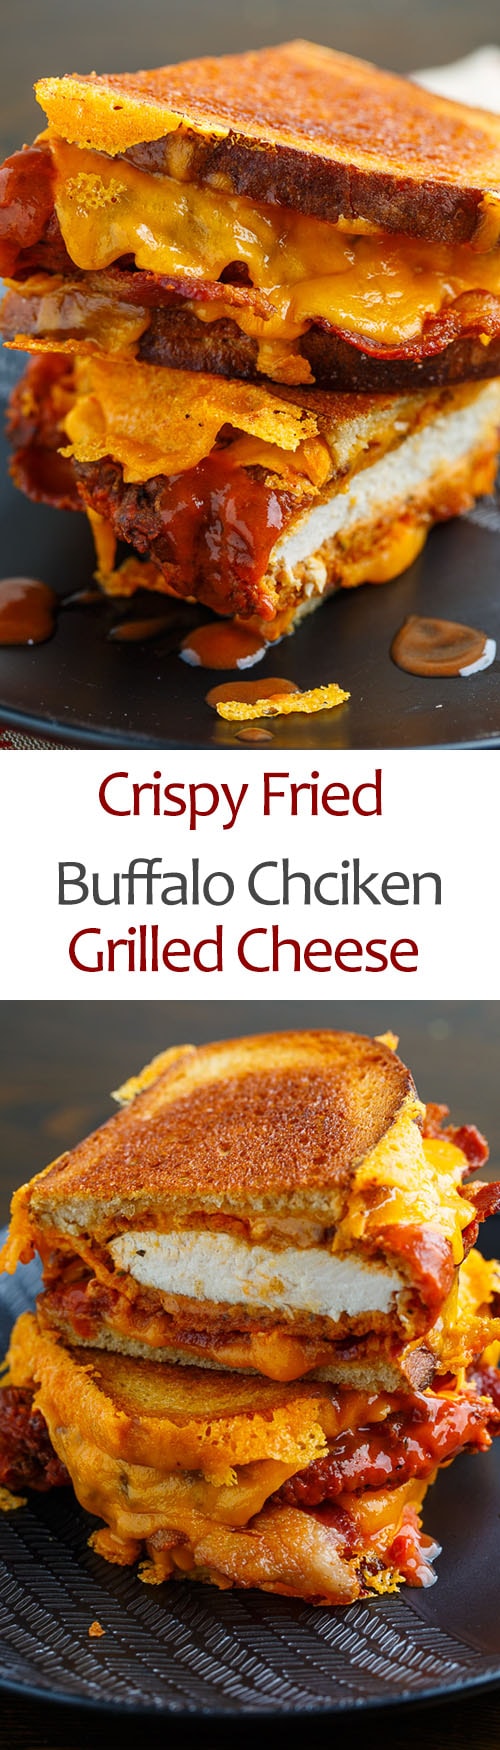 Crispy Fried Buffalo Chicken Grilled Cheese Sandwich